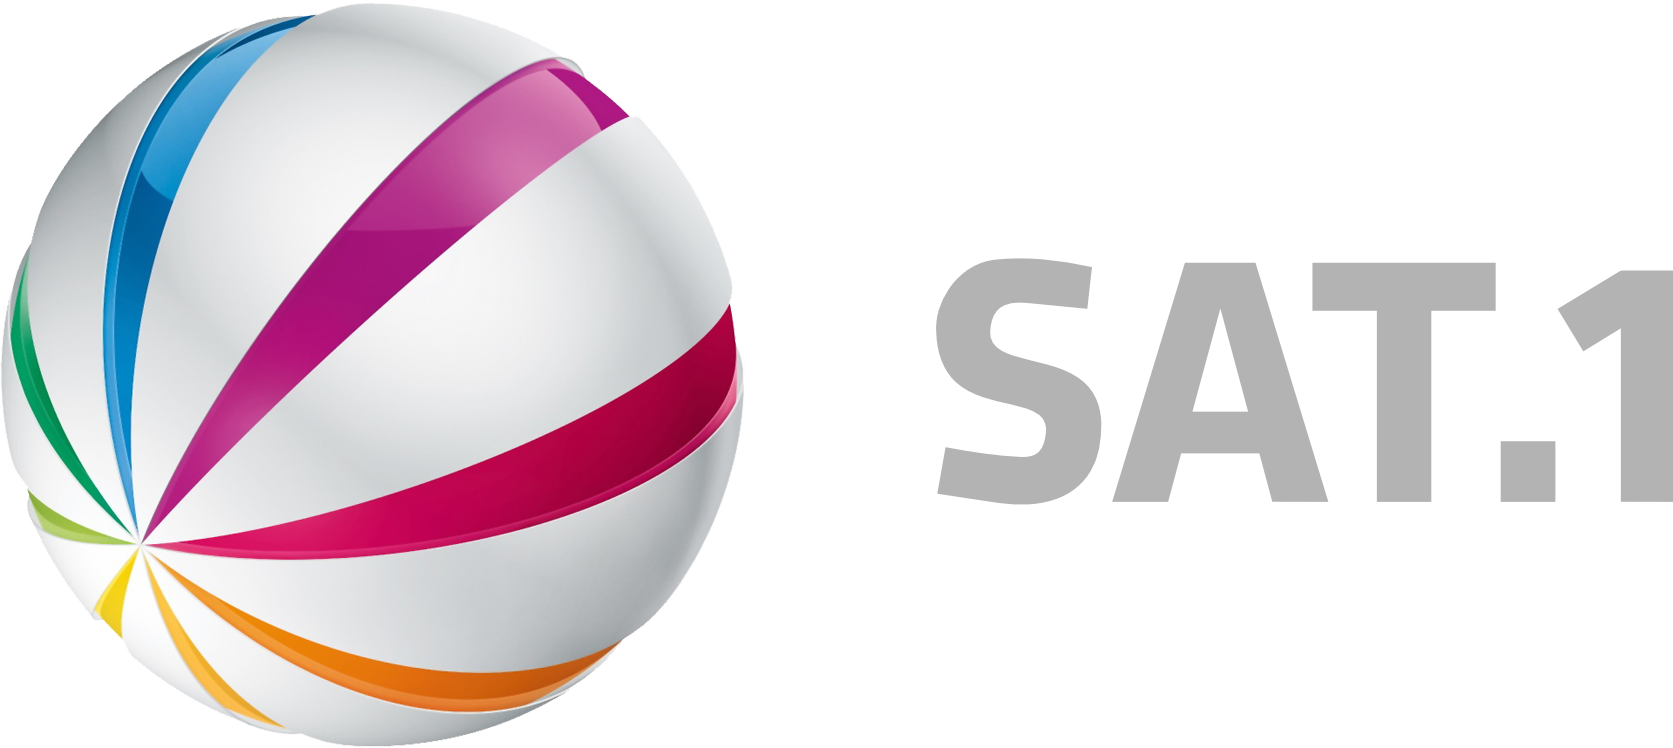 52854-sat1-logo2011.png